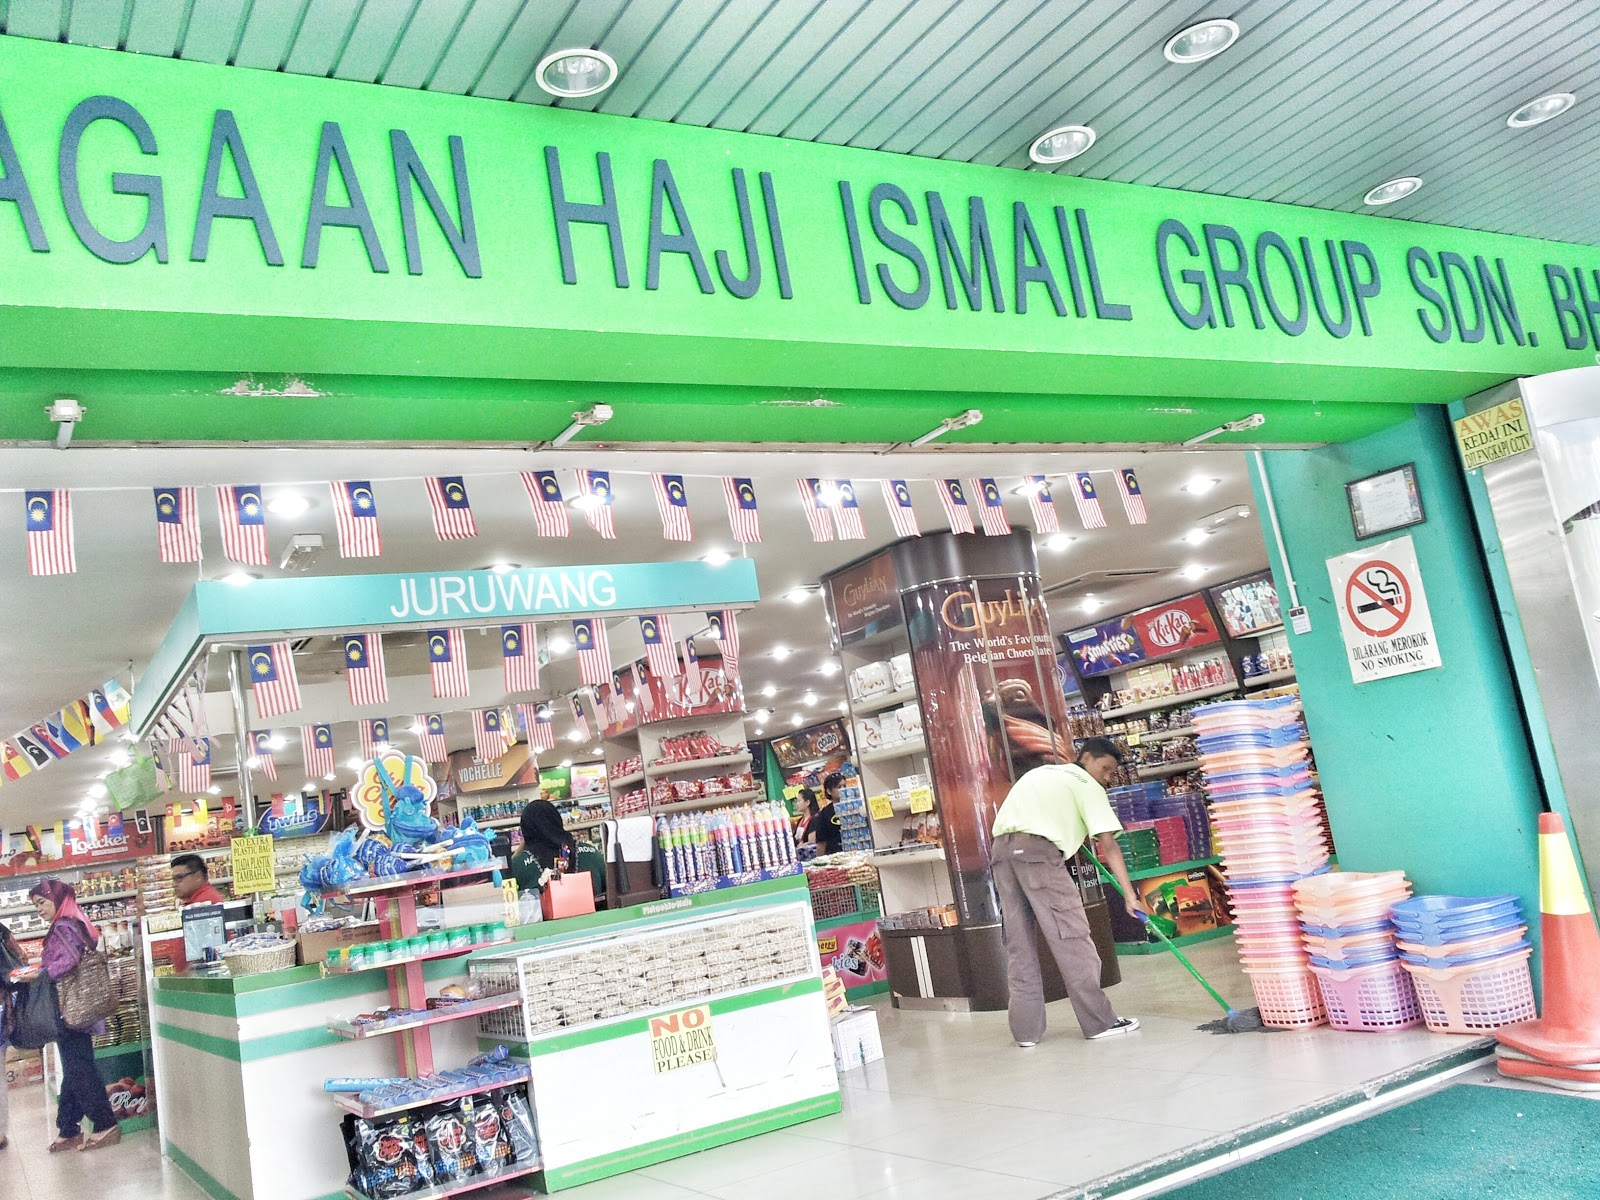 Haji ismail group hotel